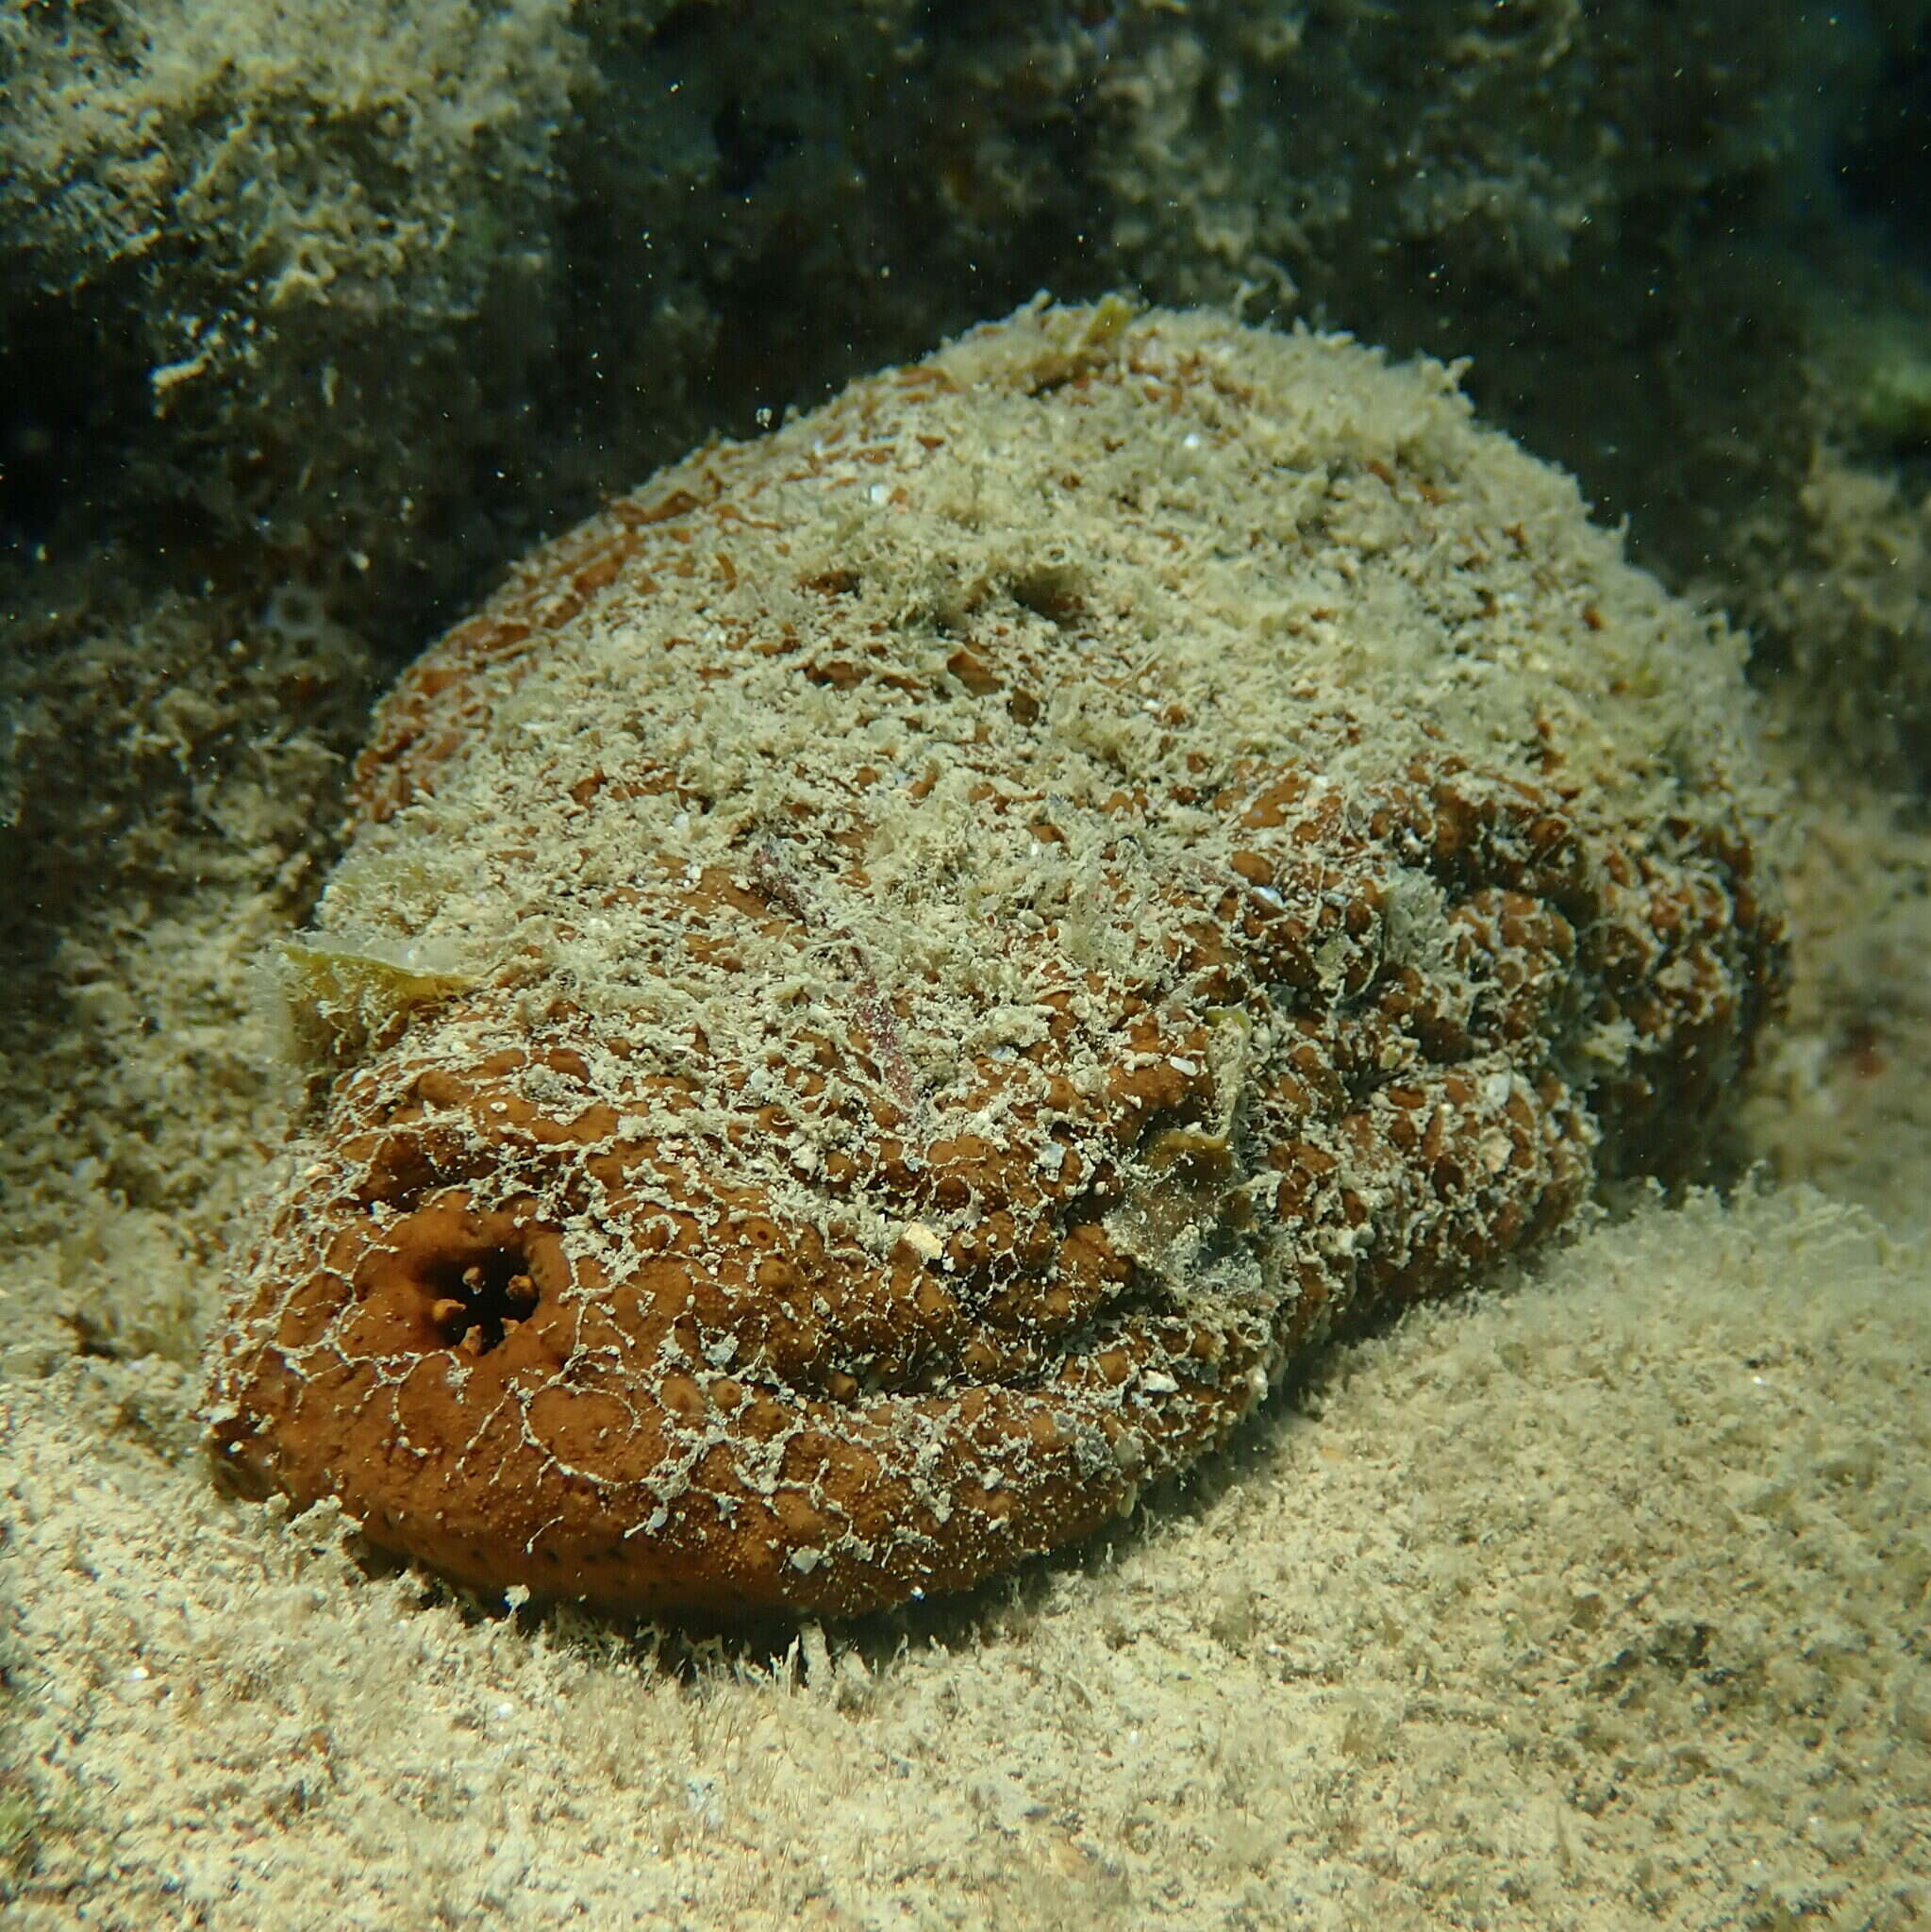 Image of Brownfish